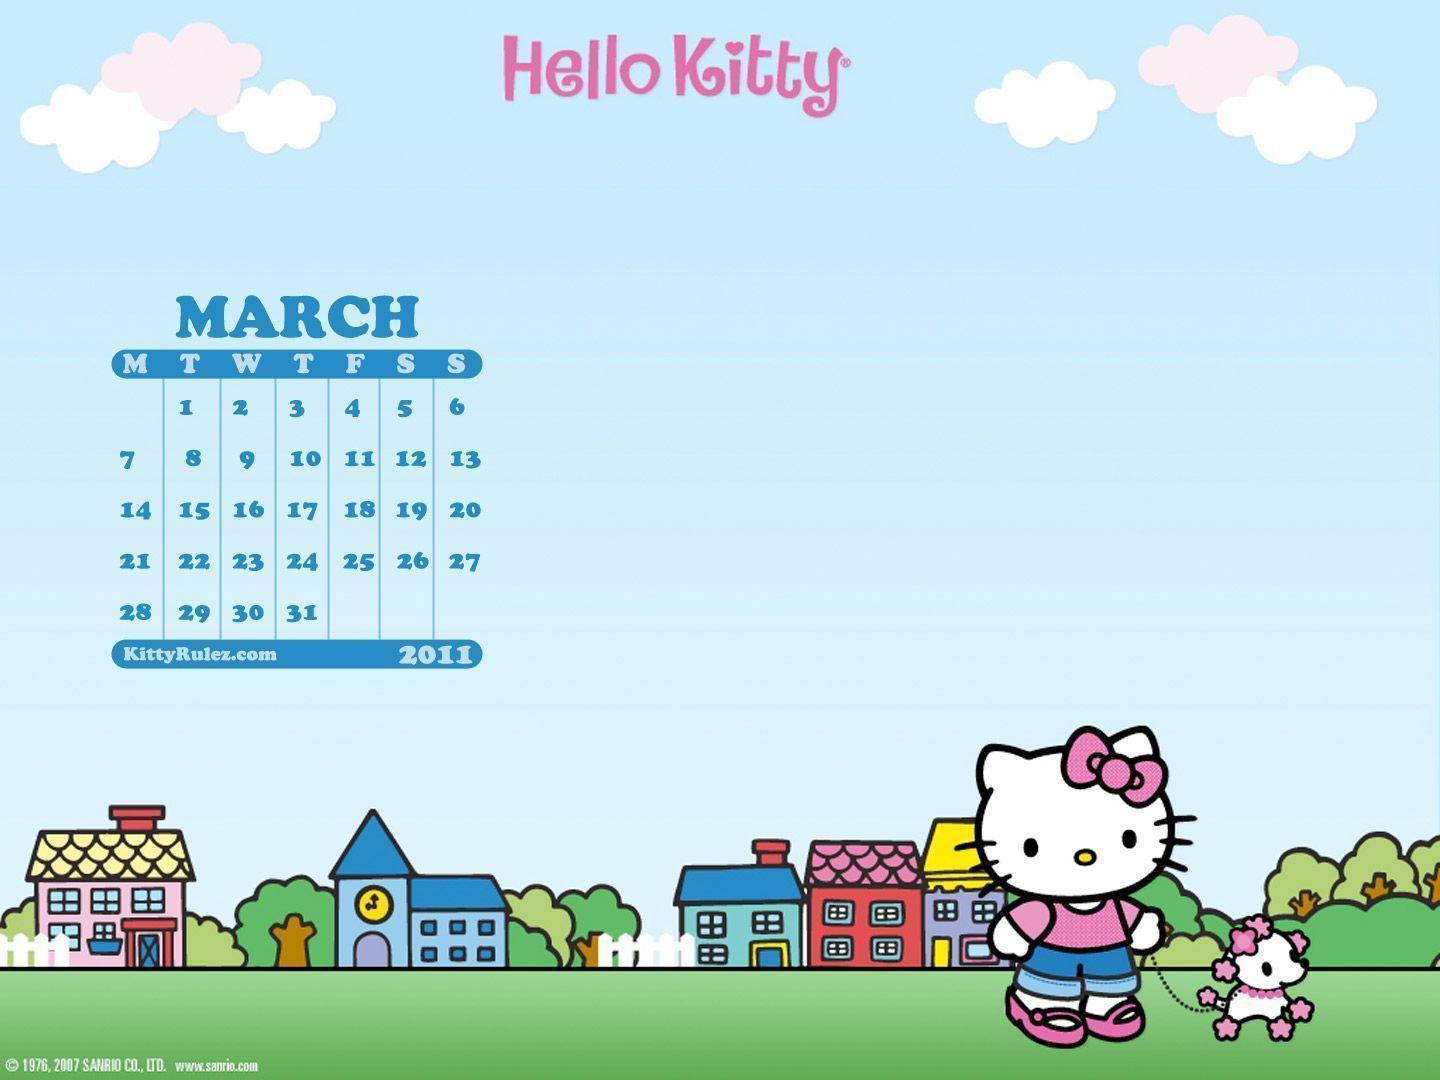 KittyRulez exclusive Hello Kitty March 2011 desktop calendar